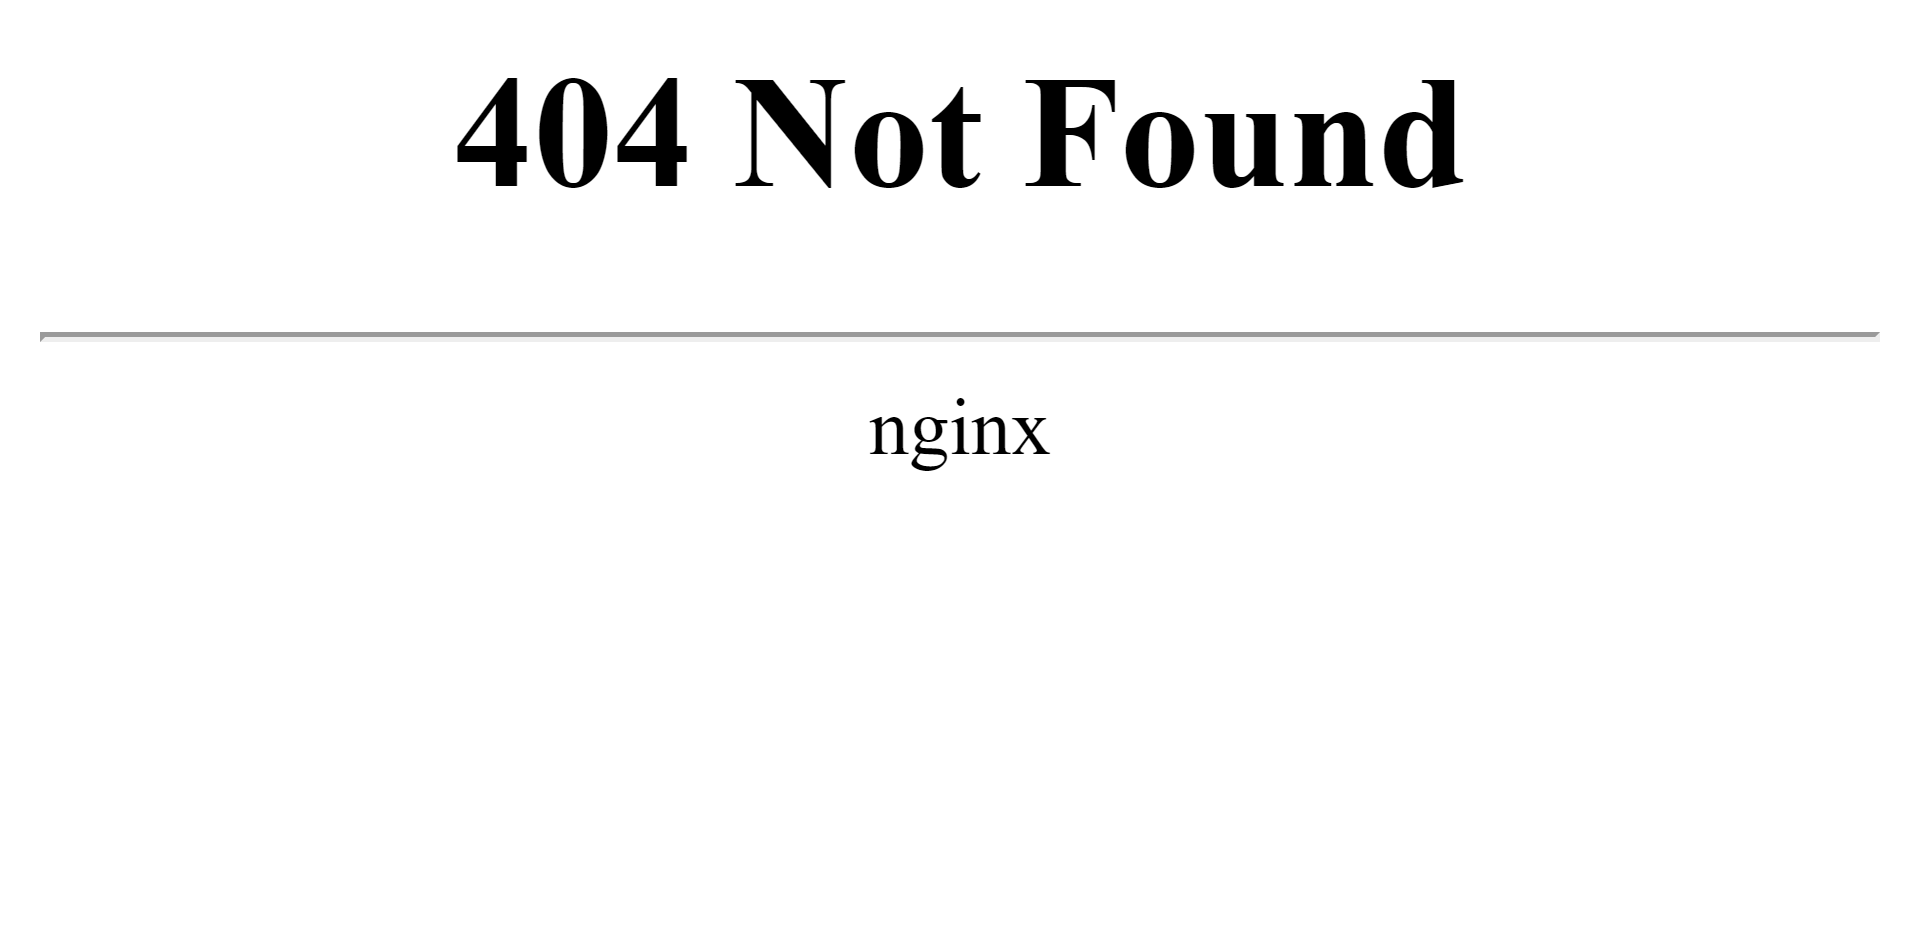 404 Not found. 404 Not found nginx. 404 Нот фаунд. 404 Not found картинка. 22 00 18 04